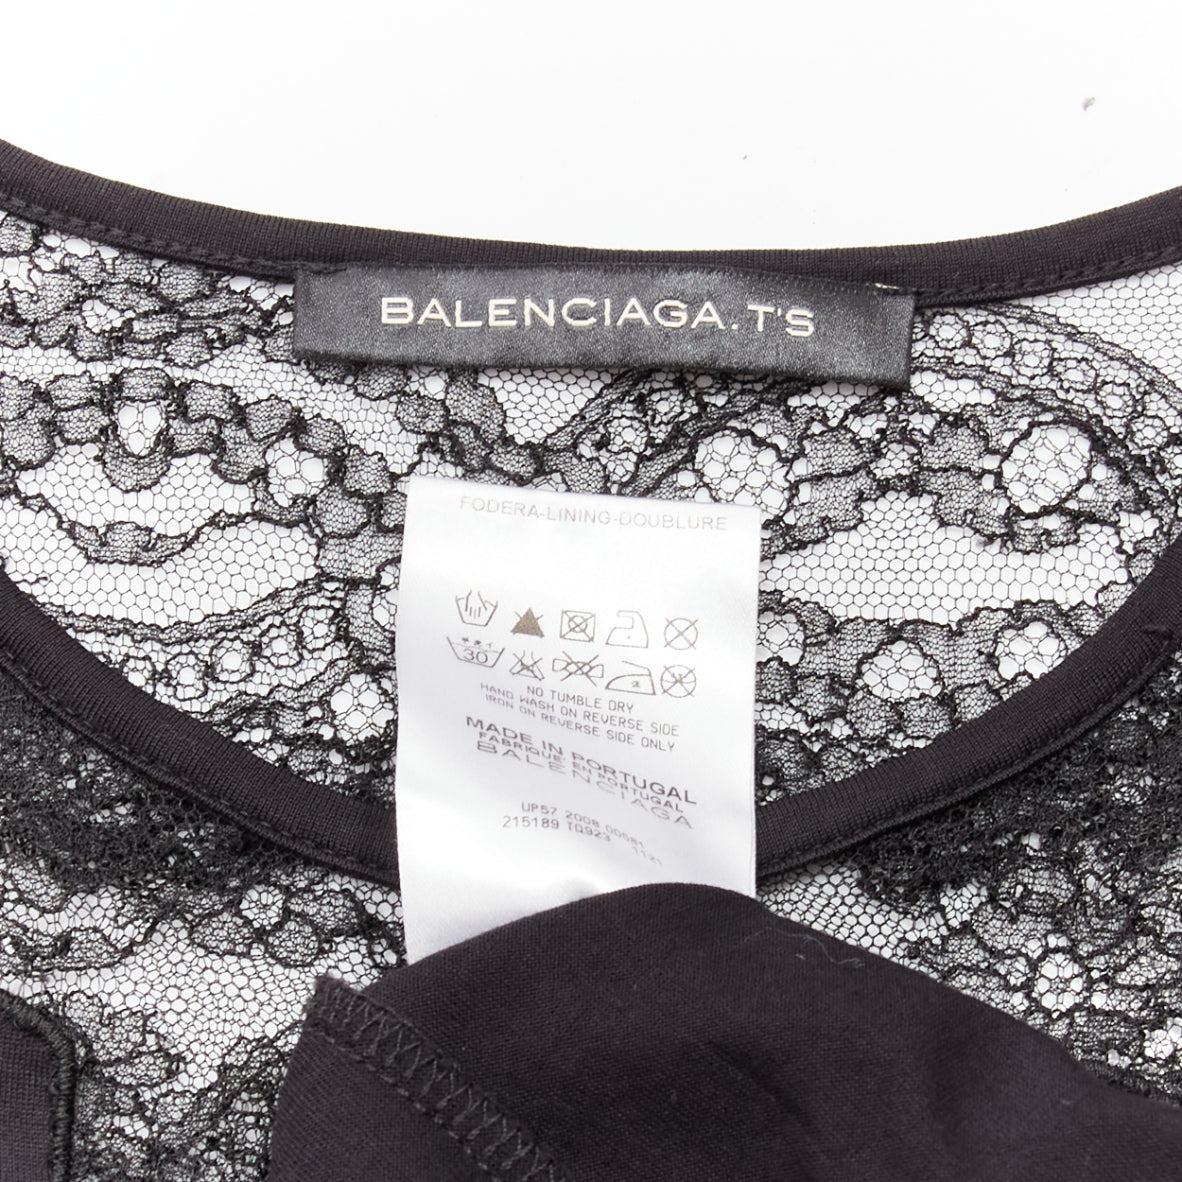 BALENCIAGA T'S 2008 black lace shoulder insert black tshirt top FR38 M For Sale 3